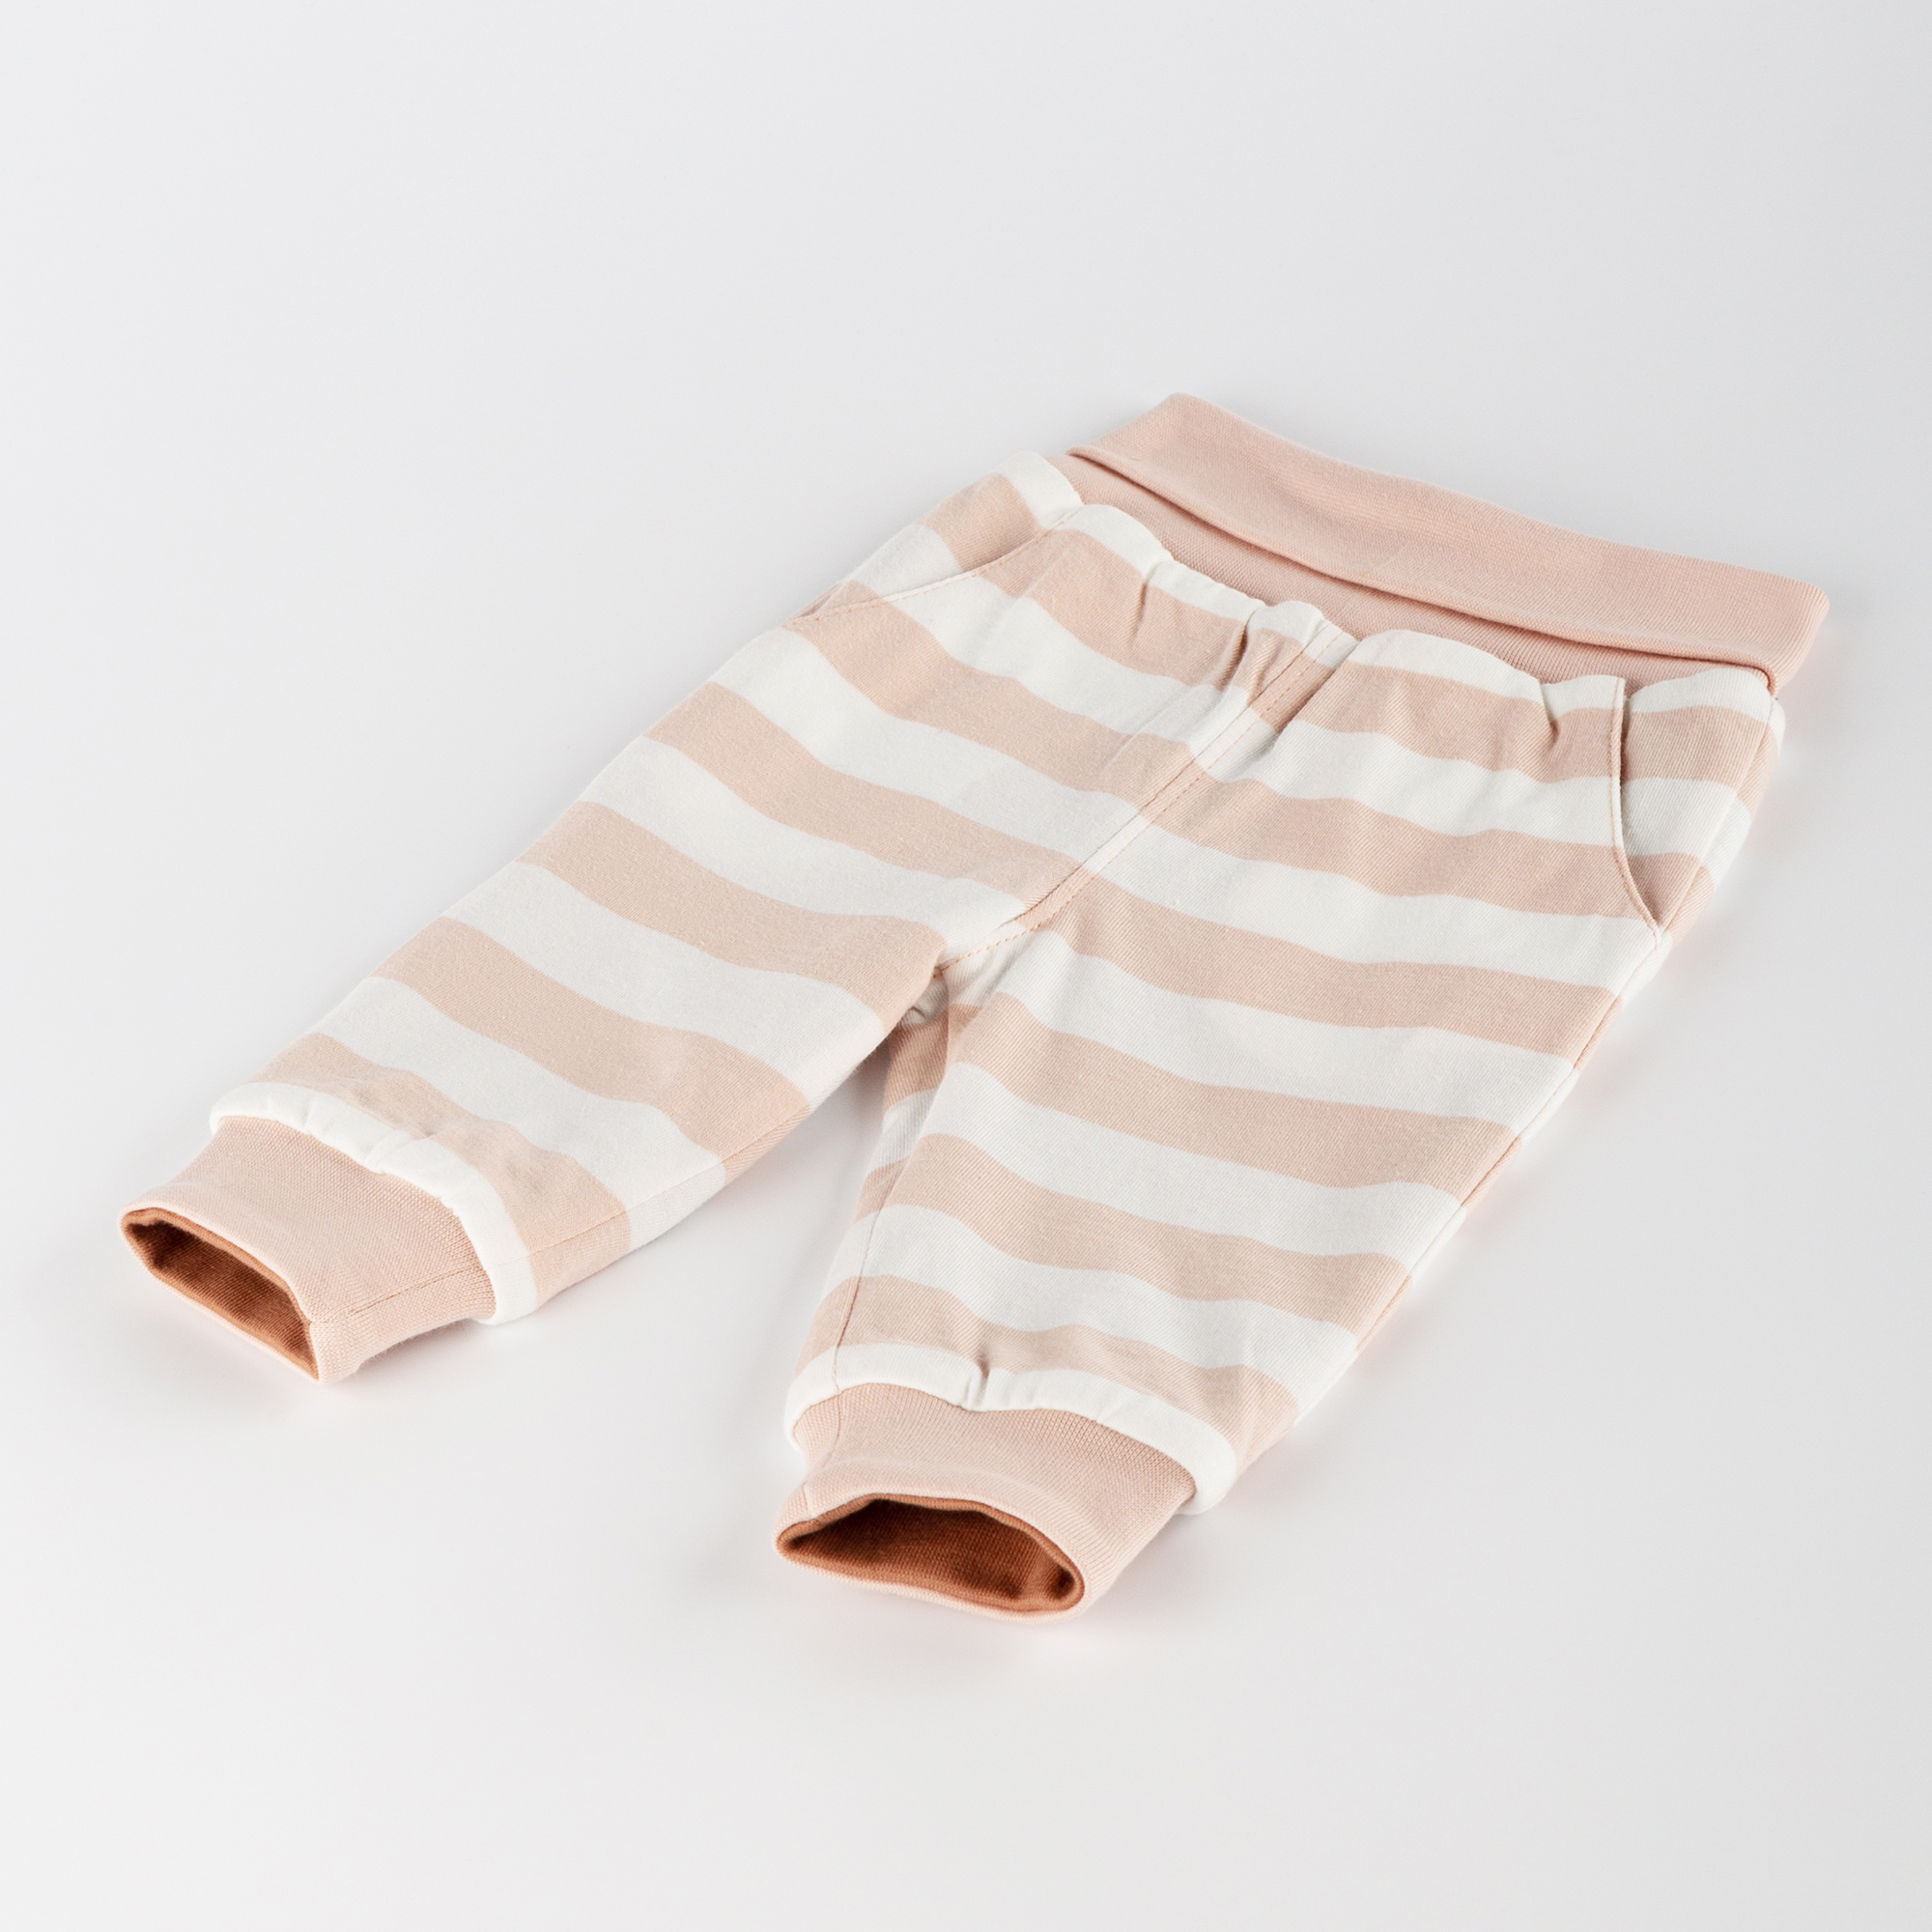 Reversible baby soft pants, pale pink/sugar brown